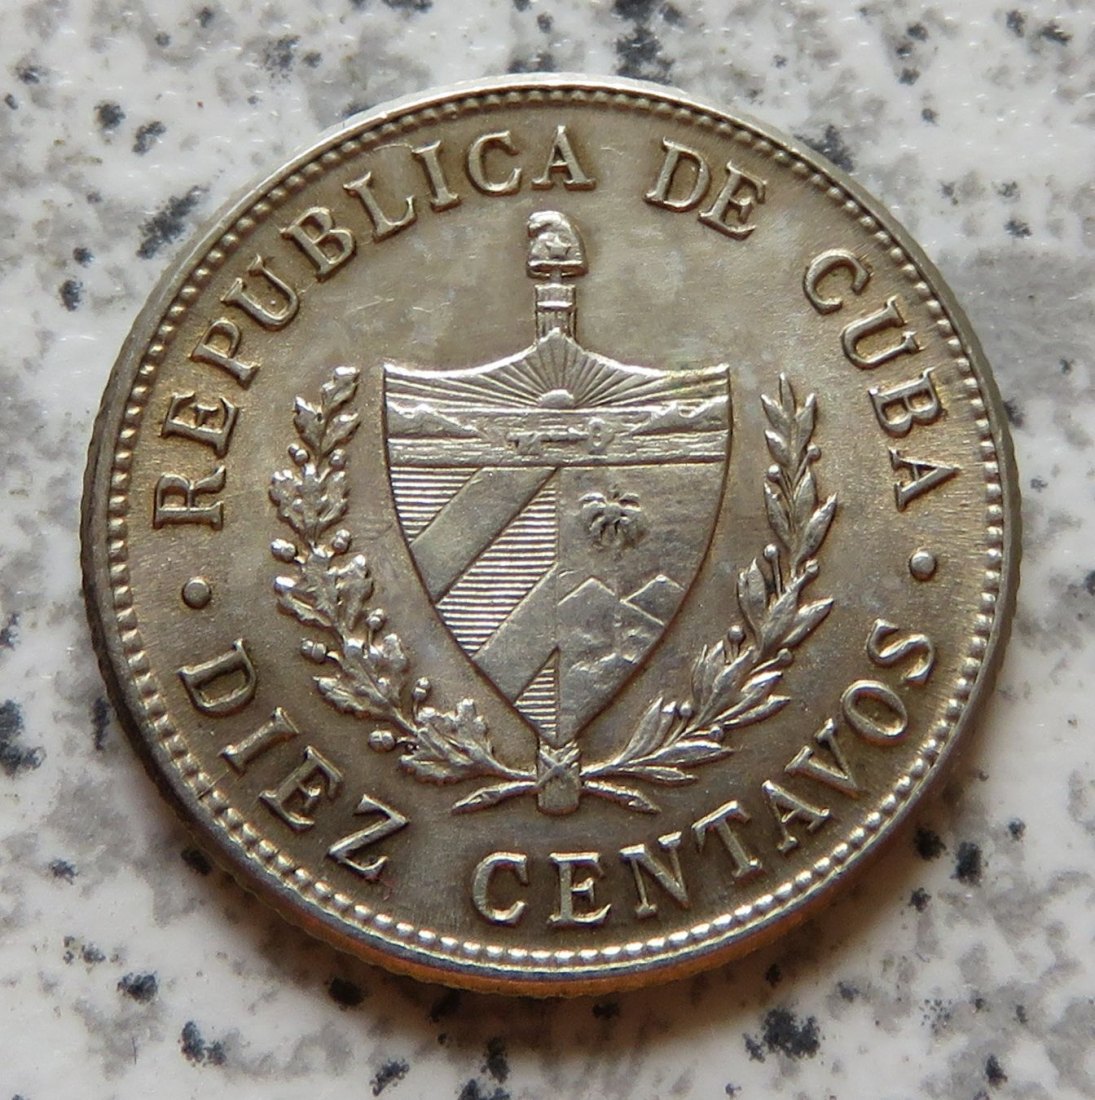  Cuba 10 Centavos 1949   